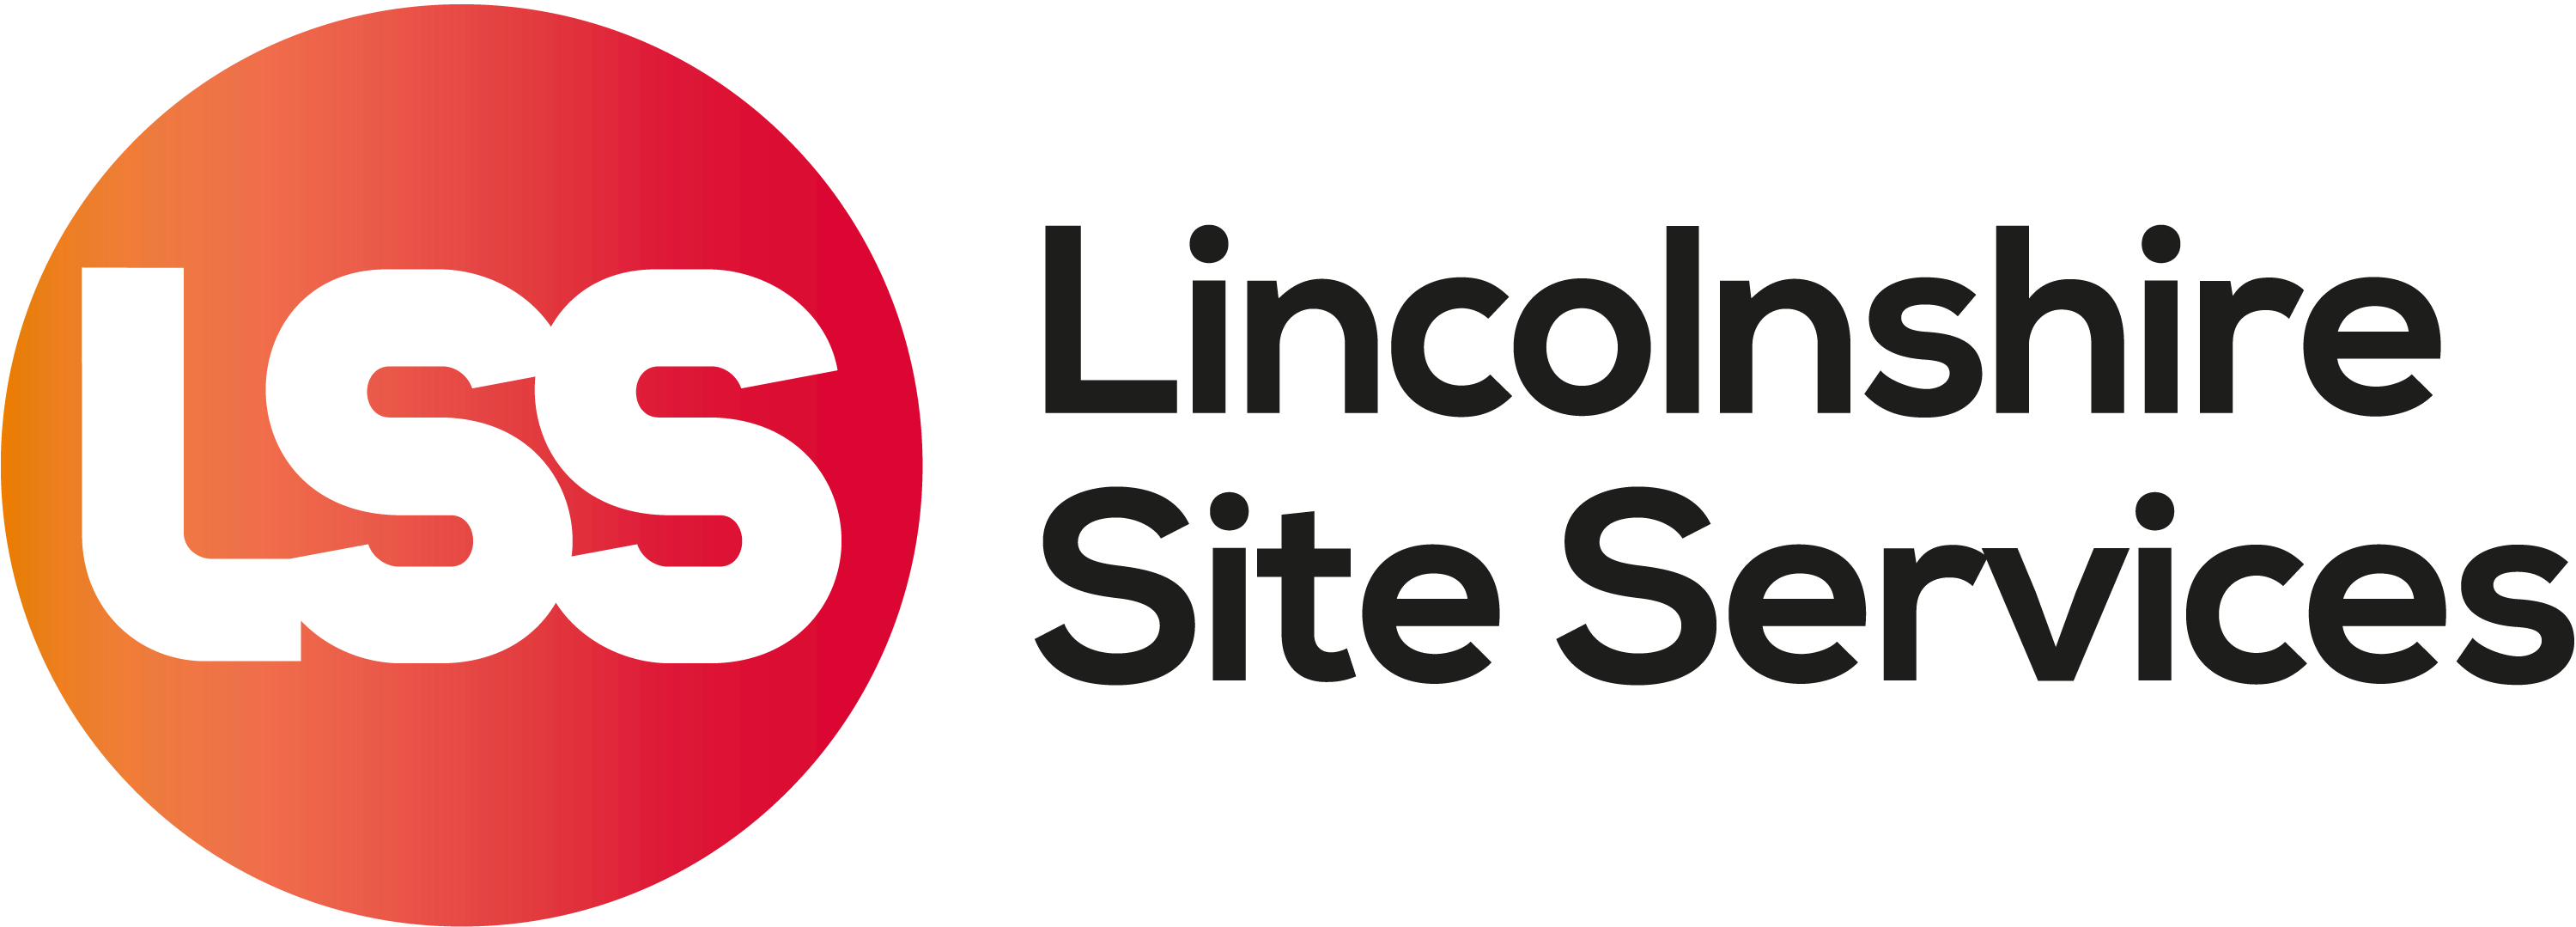 Lincolnshire Site Services